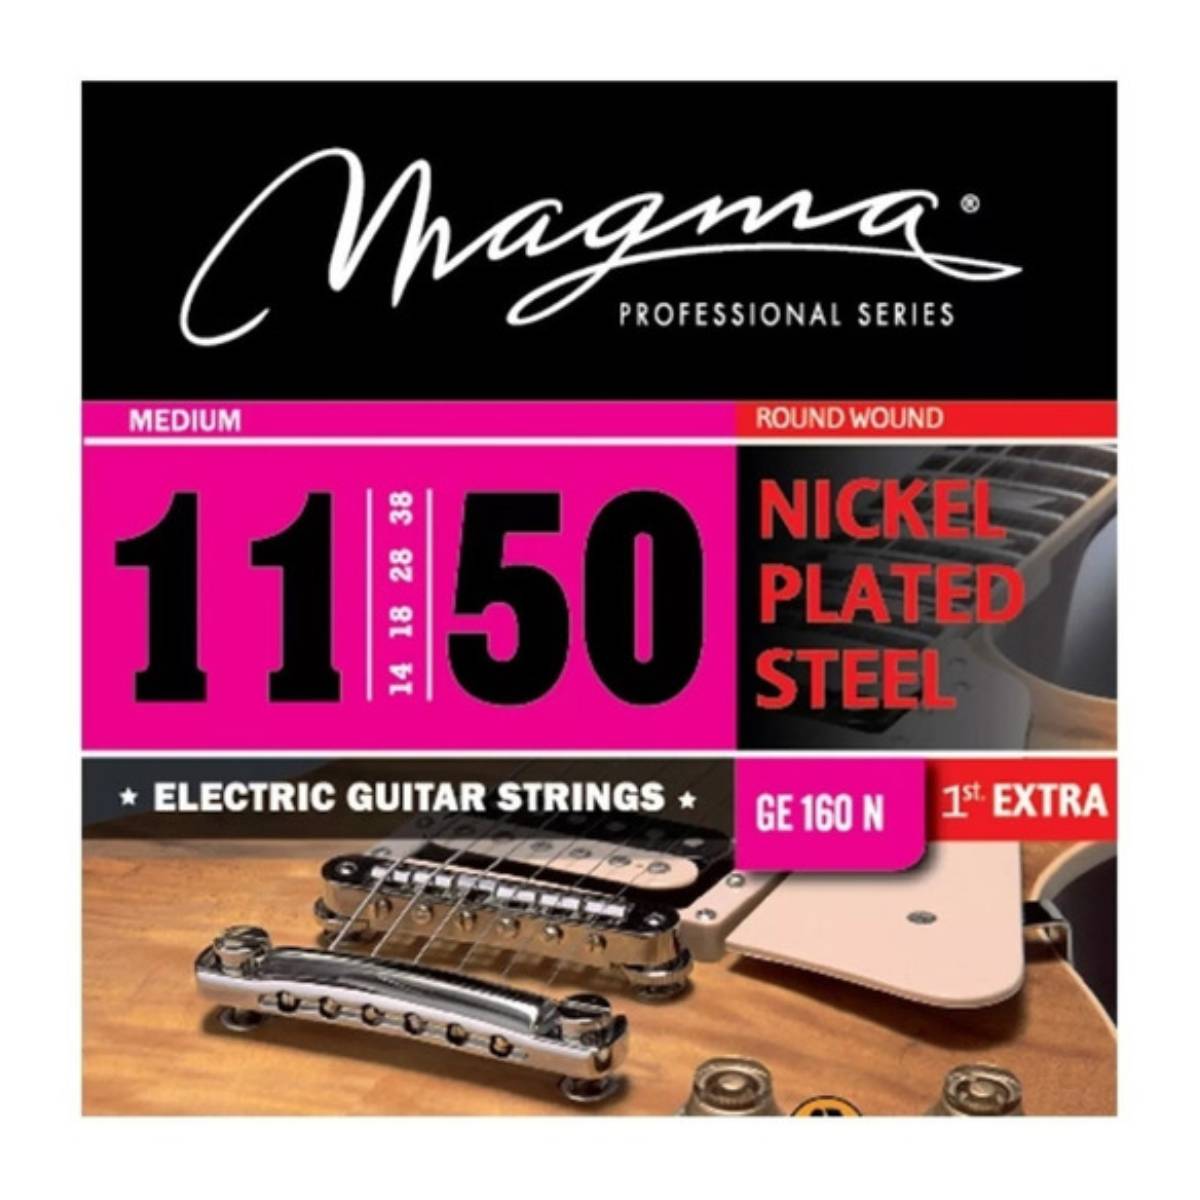 Encordado guitarra eléctrica Magma GE160N